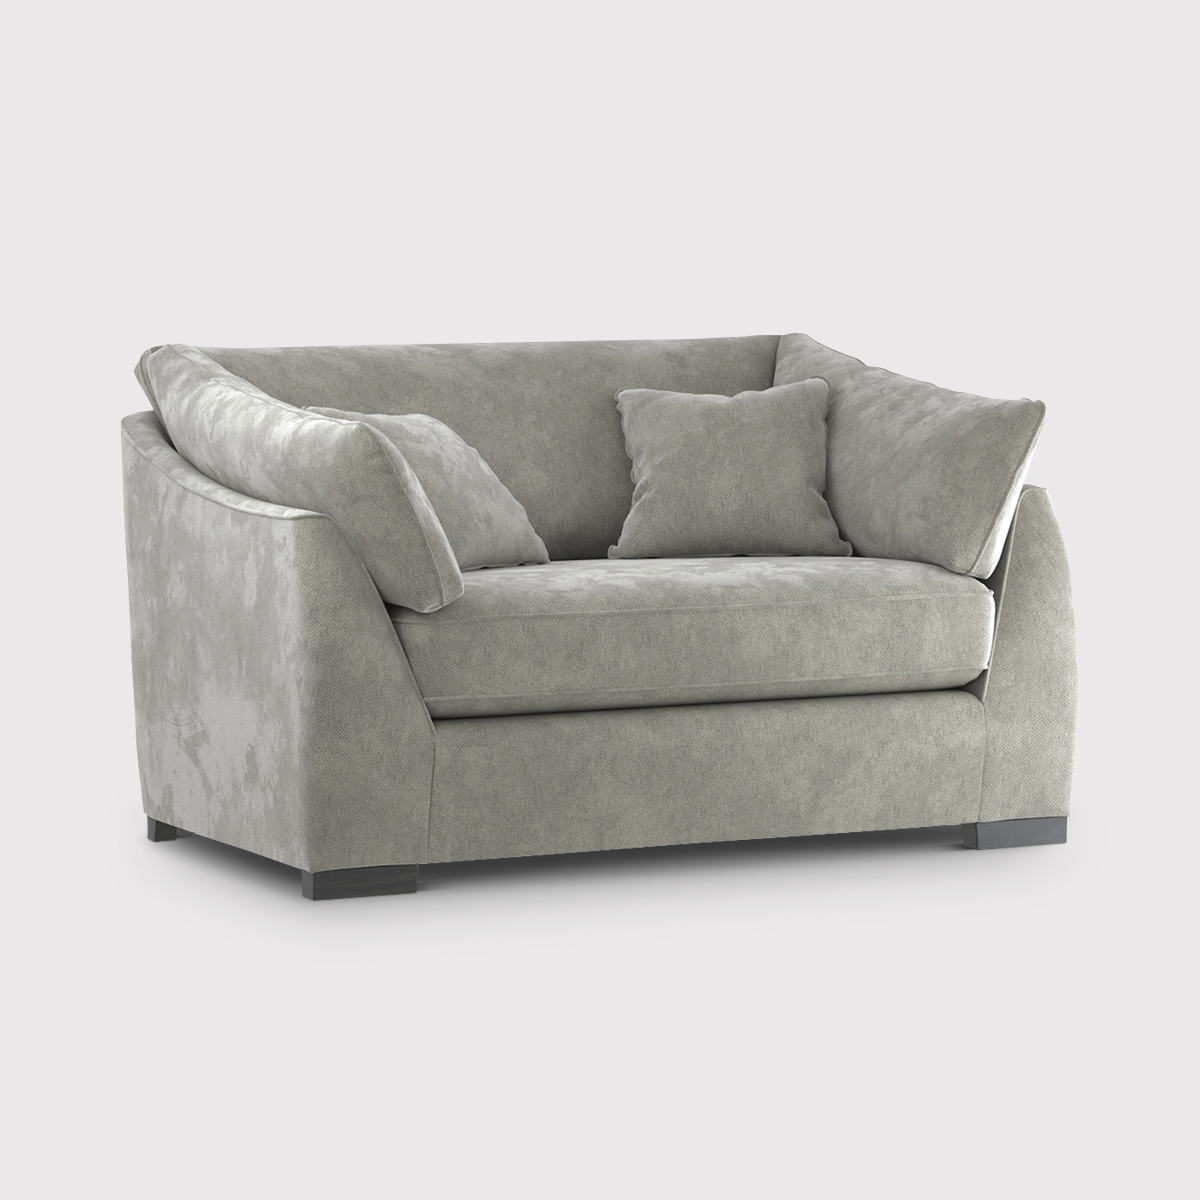 Borelly Snuggler Snuggle Chair, Grey Fabric | Barker & Stonehouse